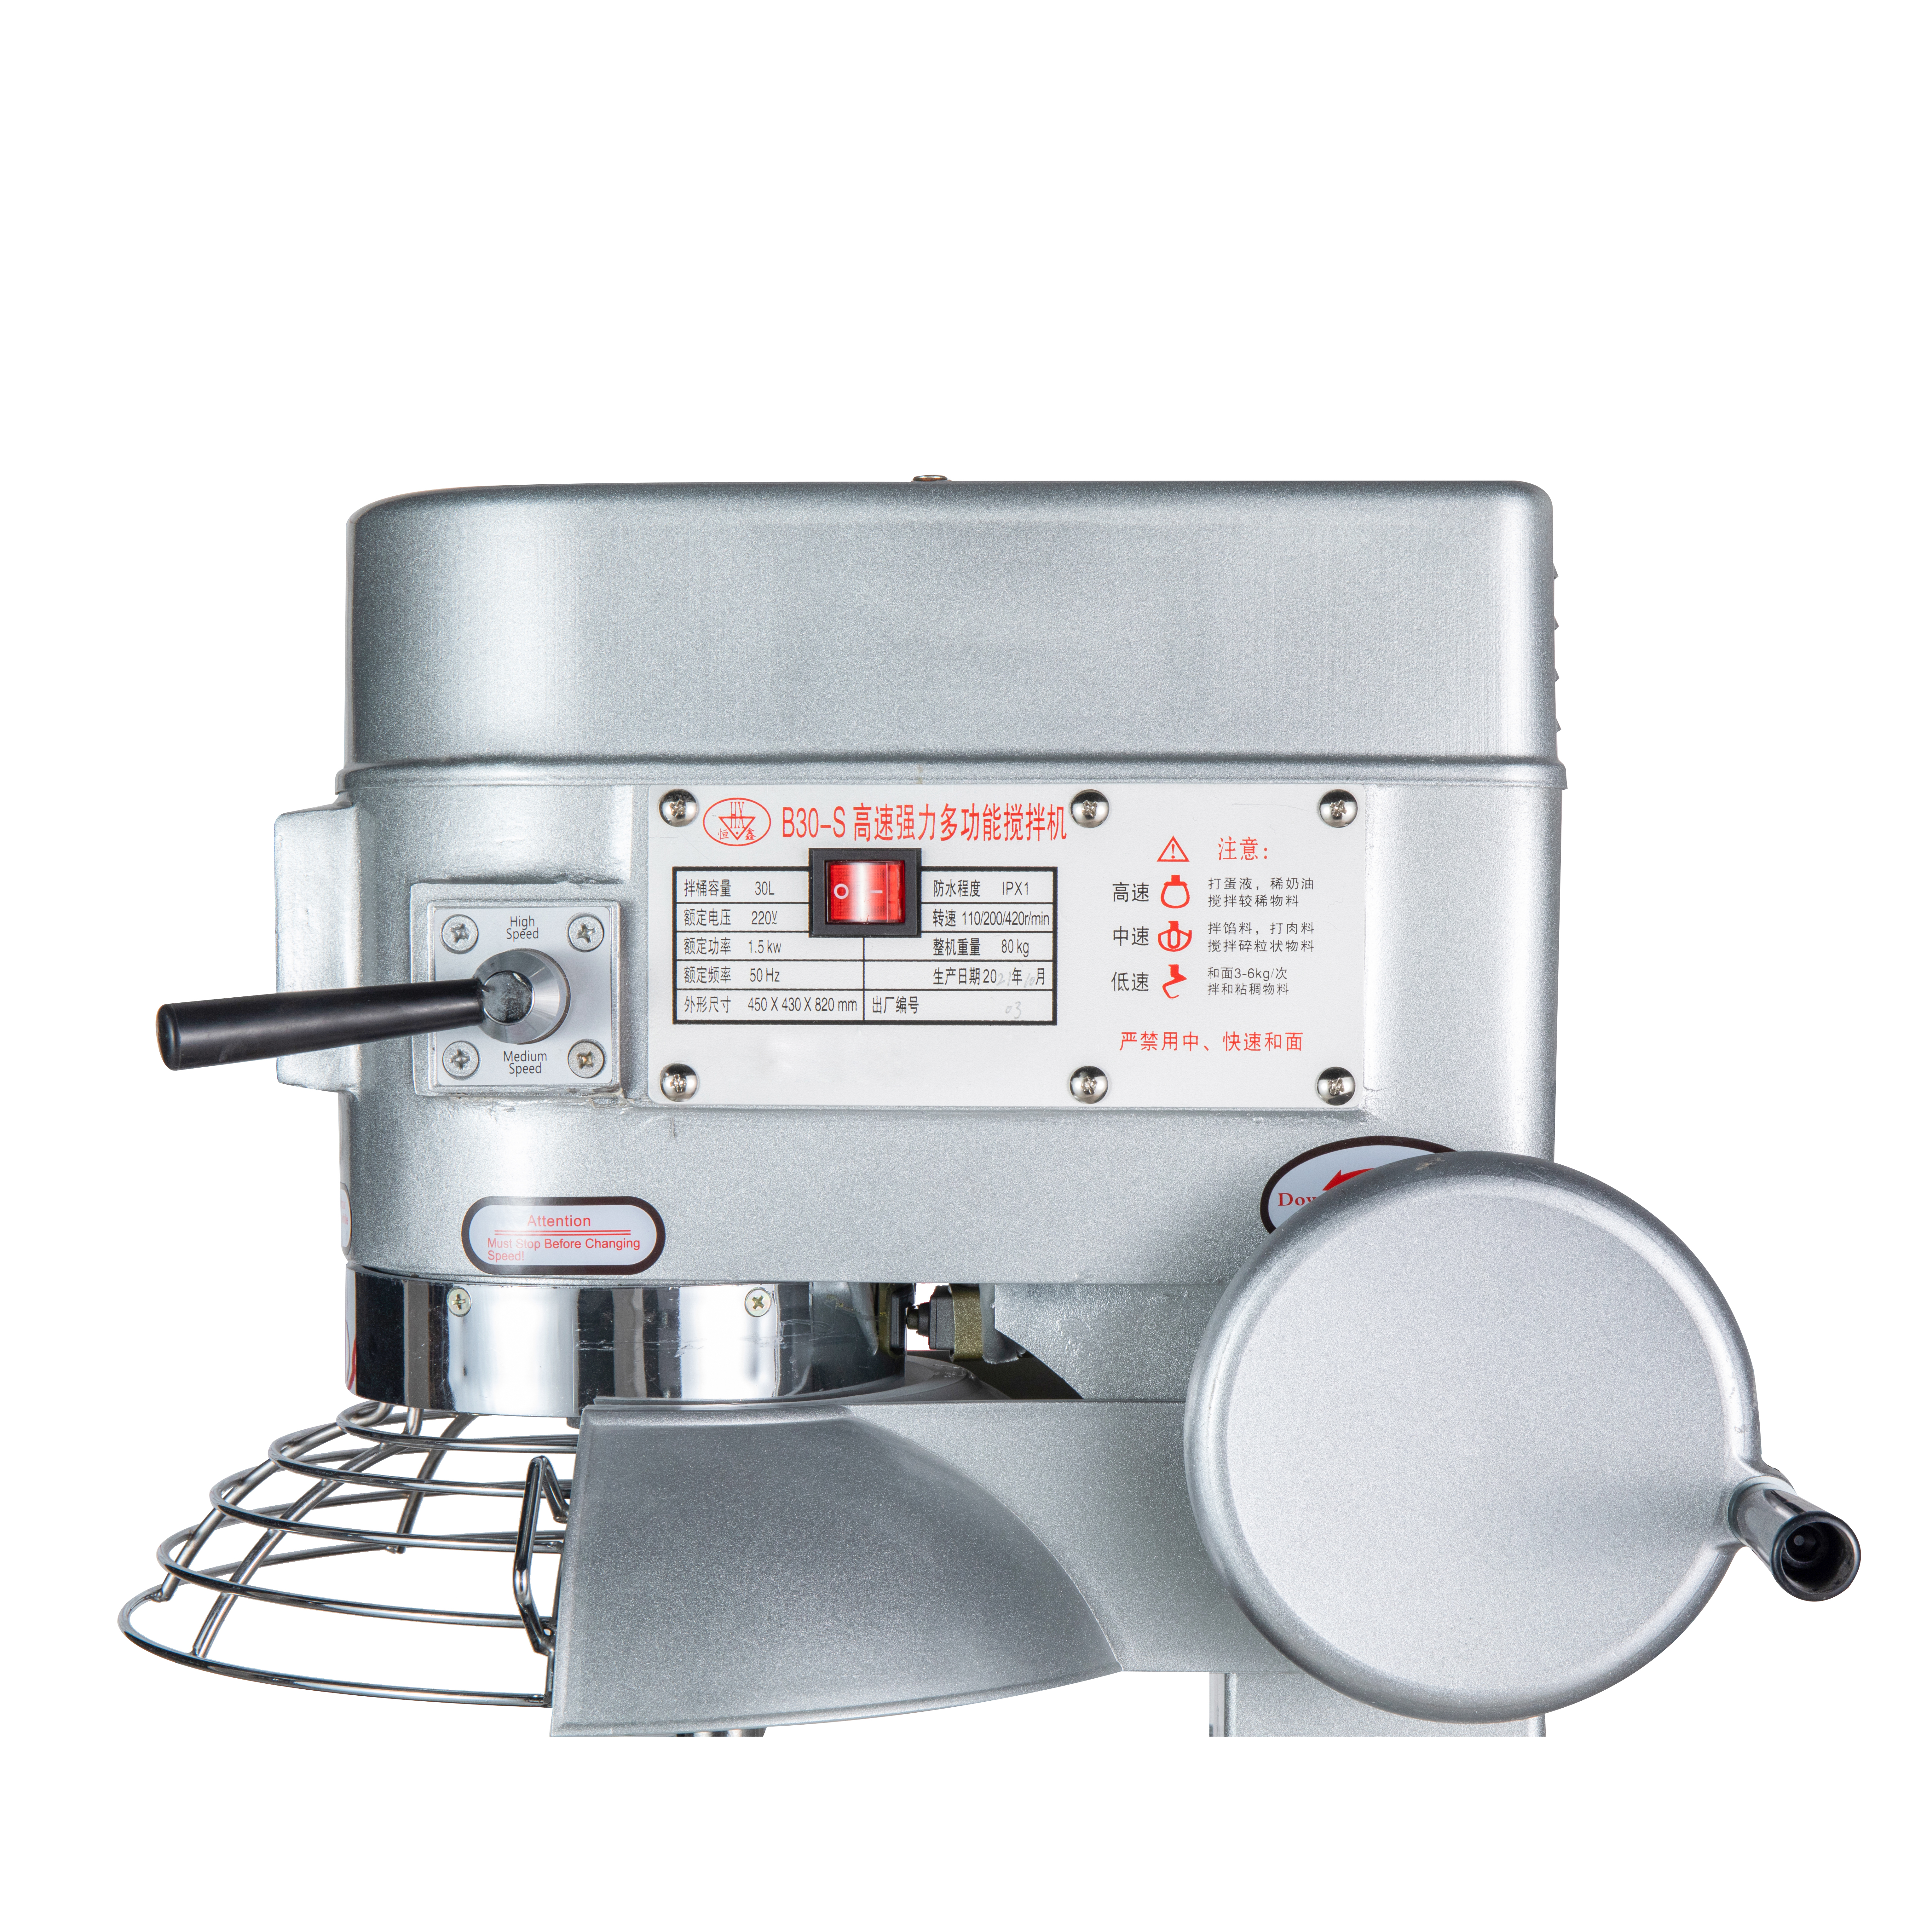 Hot Chocolate Dispenser 5L - LINKRICH MACHINERY GROUP